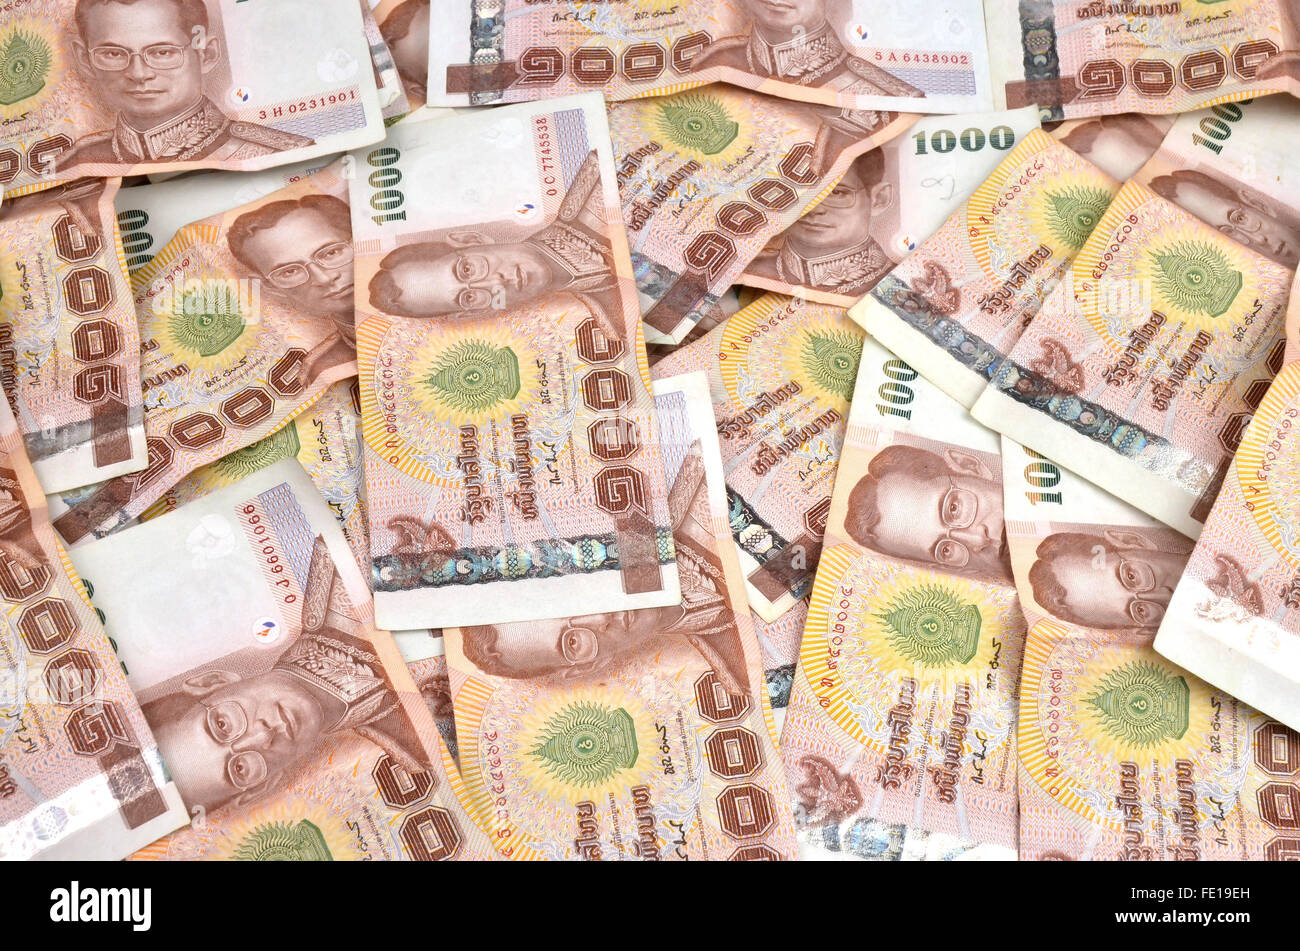 close up of 1000 baht banknotes and calculator Stock Photo